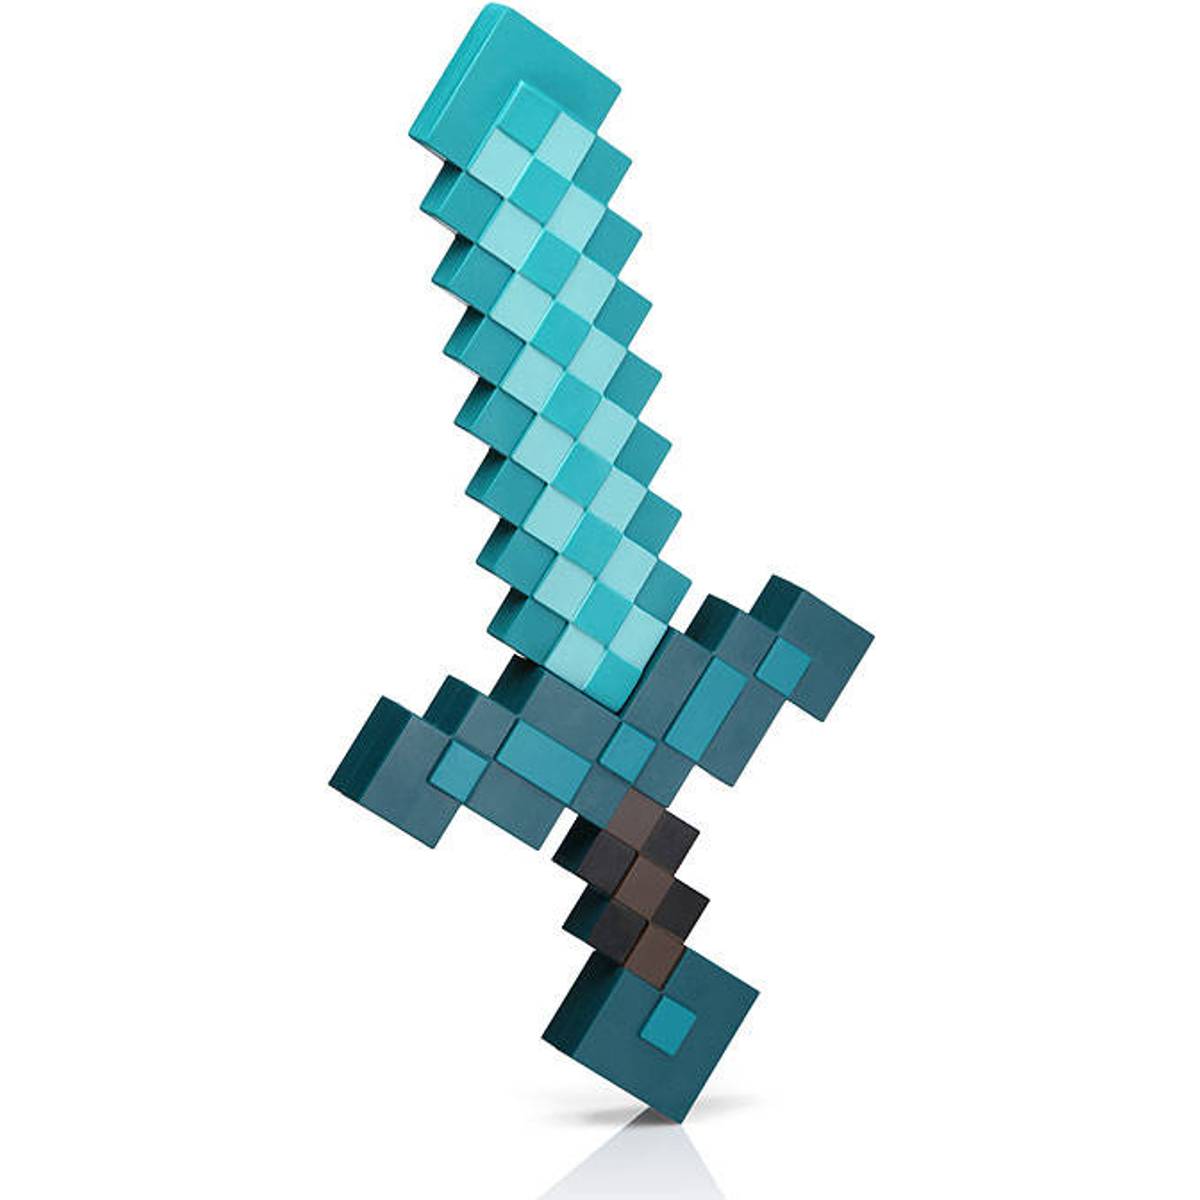 Minecraft sværd • Find den billigste pris hos PriceRunner nu »